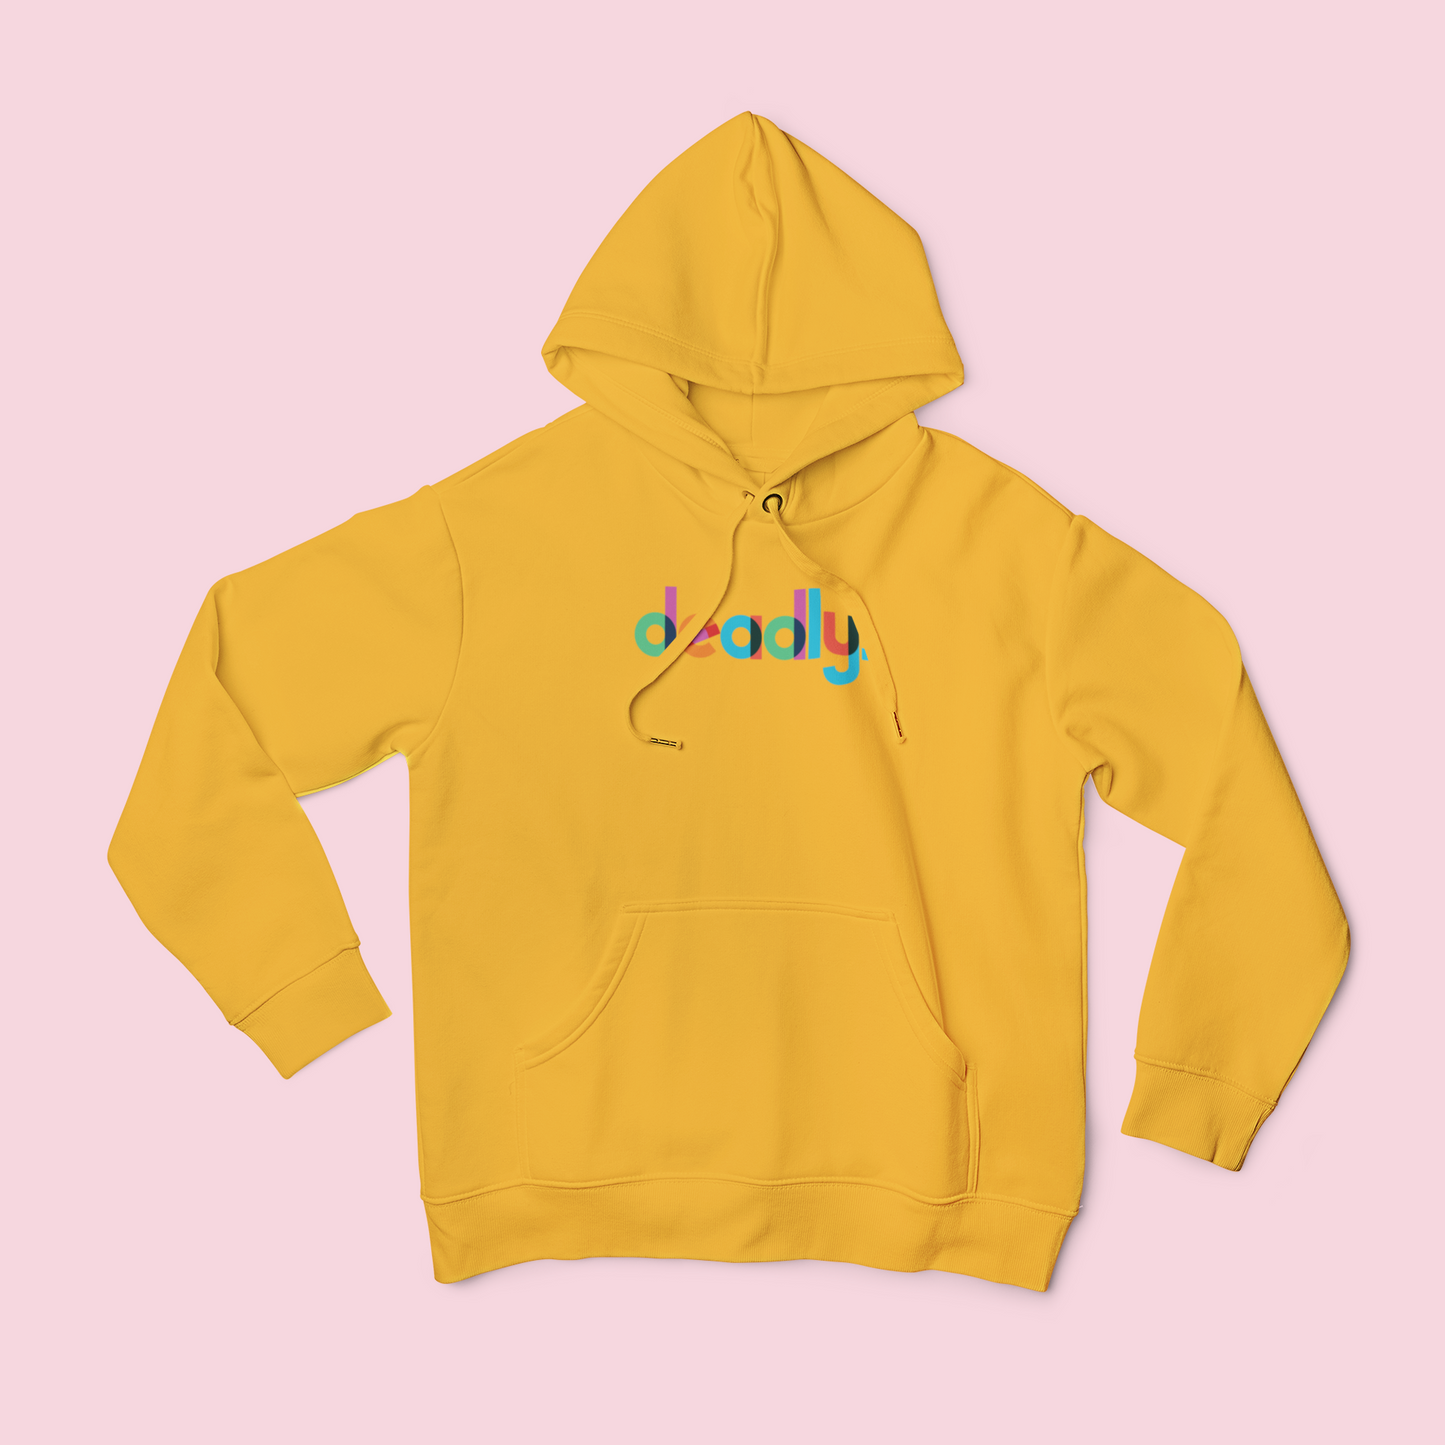 PRE-ORDER - Deadly Sweater/Hoodie